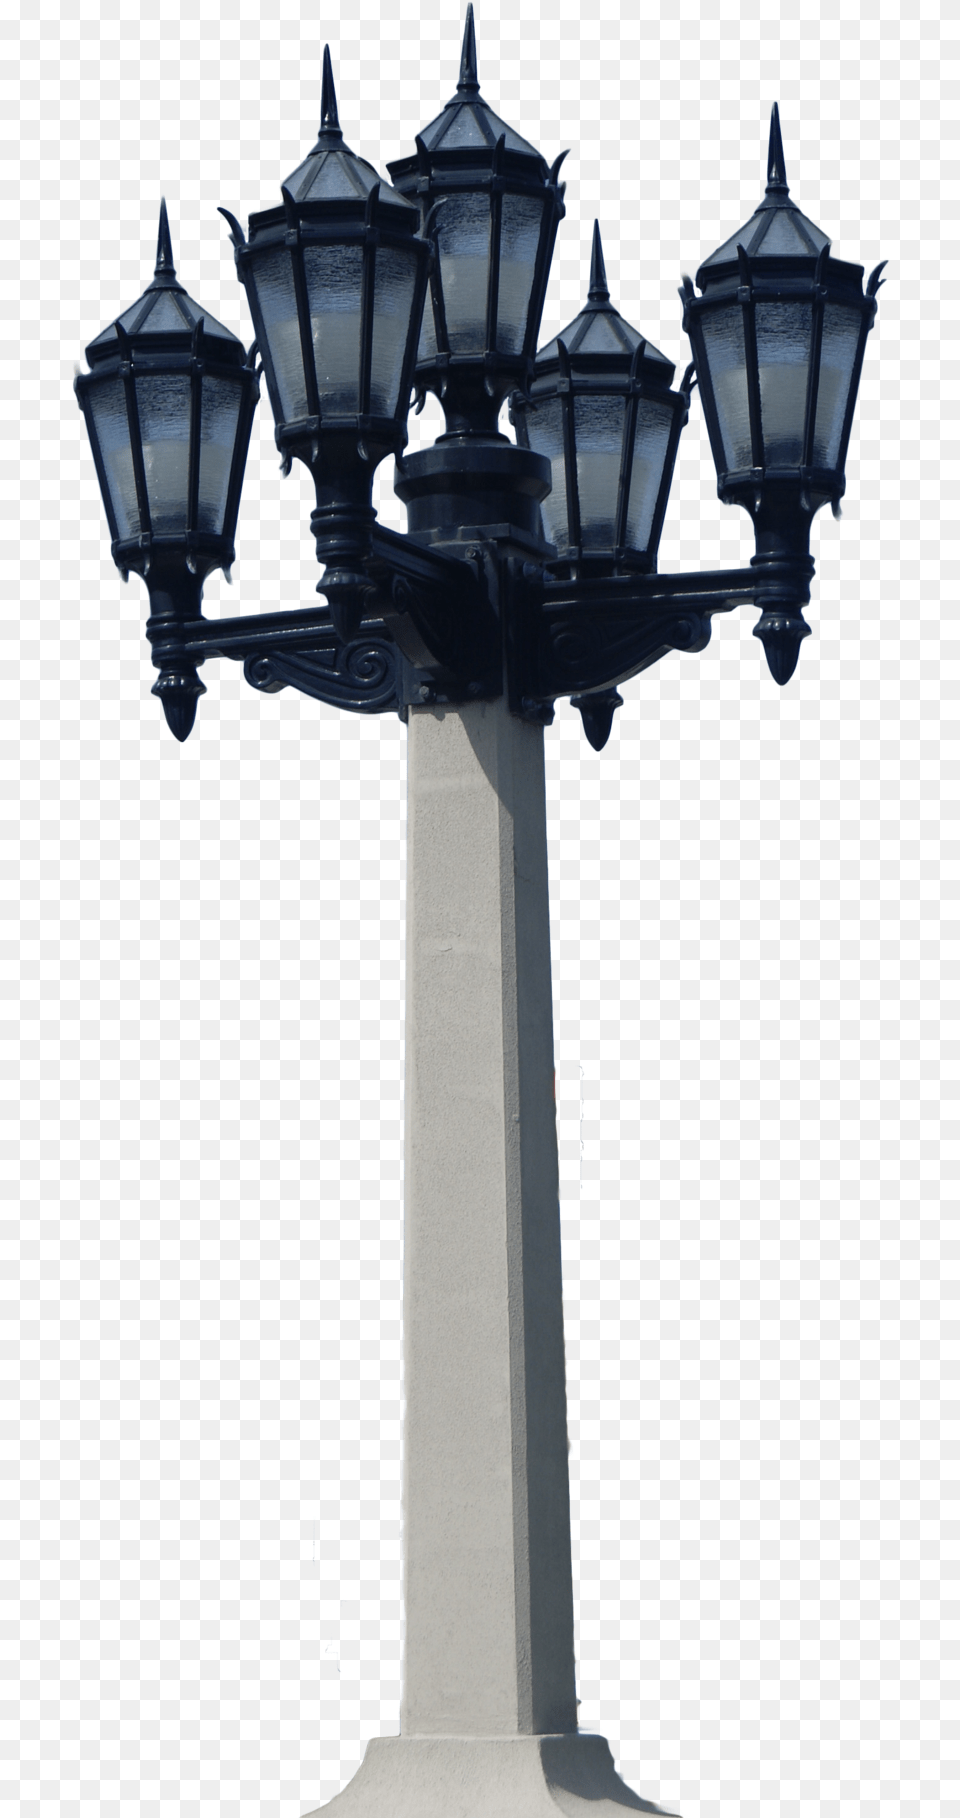 Lamp Post Image Street Light, Lamp Post Free Png